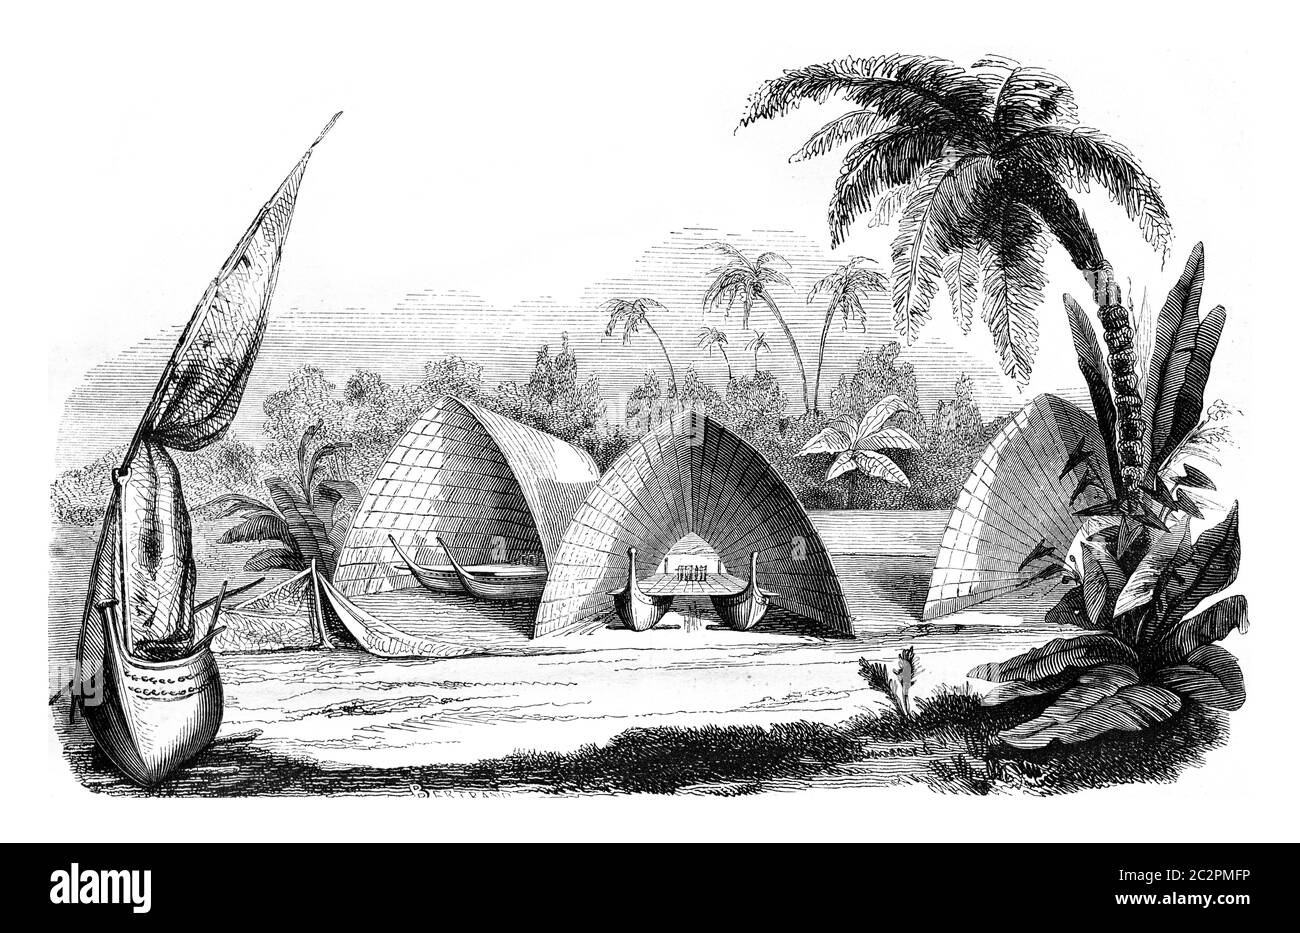 Central Polynesia, Hangars fleet, Tonga Tabou, vintage engraved illustration. Magasin Pittoresque 1846. Stock Photo